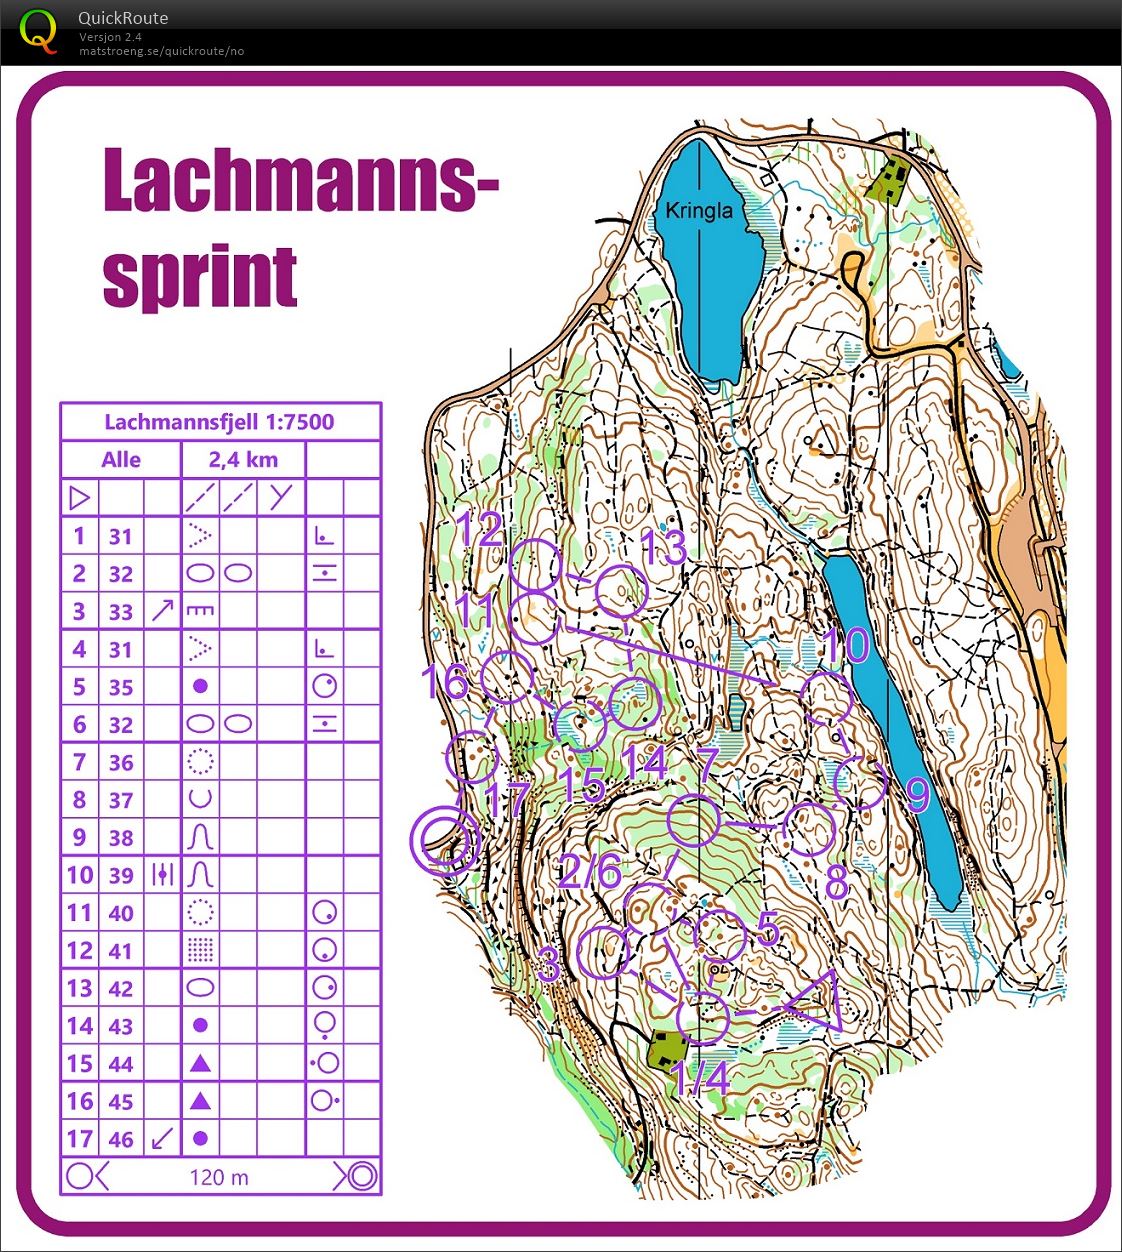 Lachmannssprint (25-02-2020)